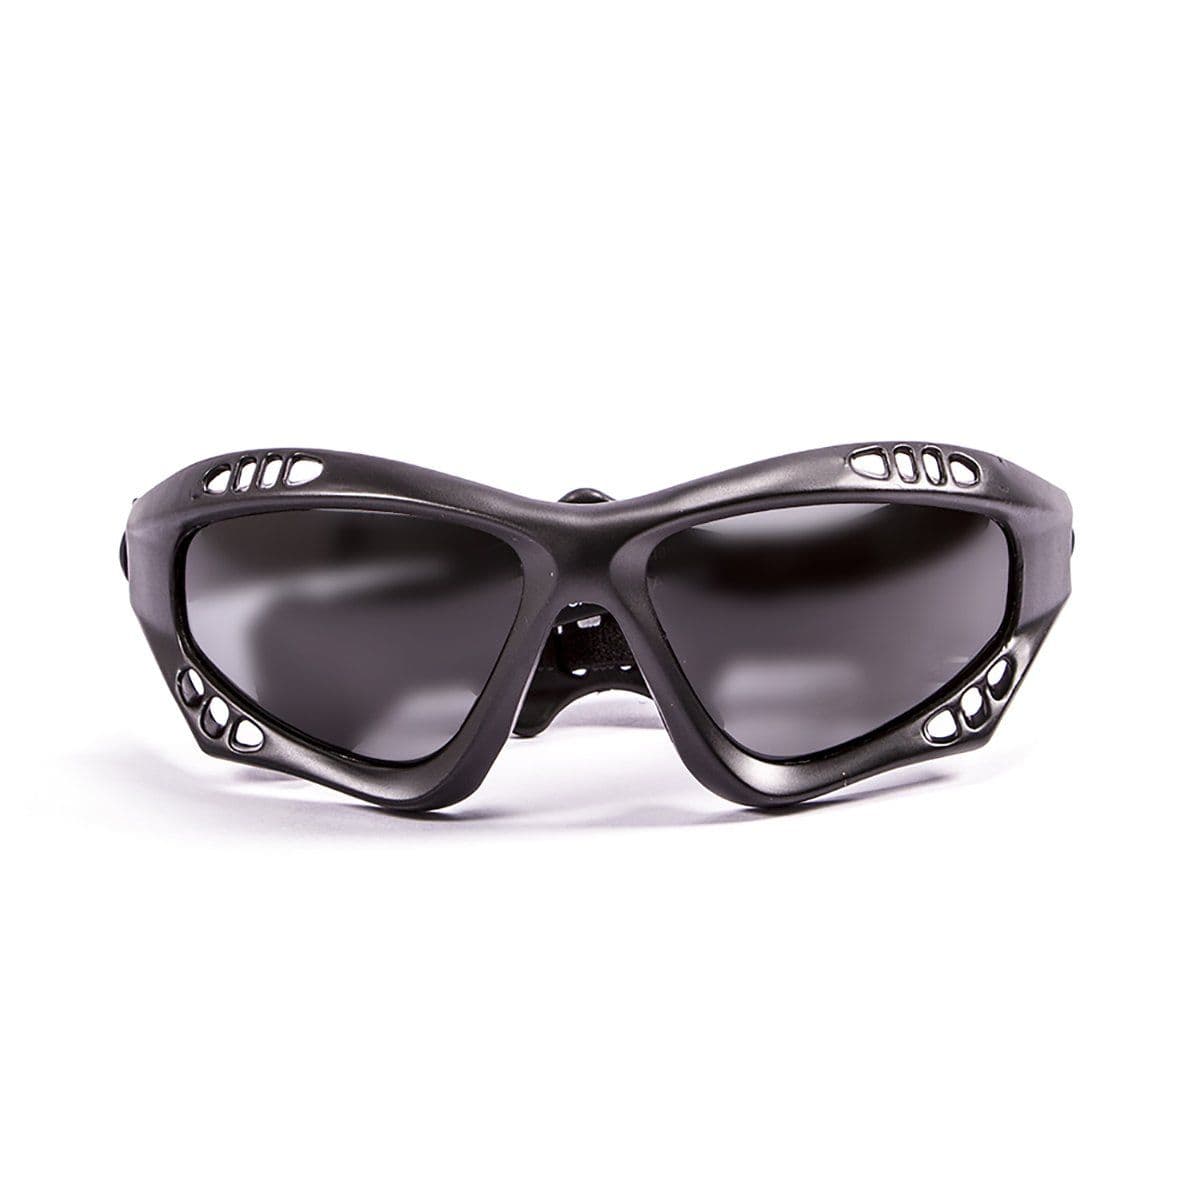 Ocean Australia Water Sport Sunglasses